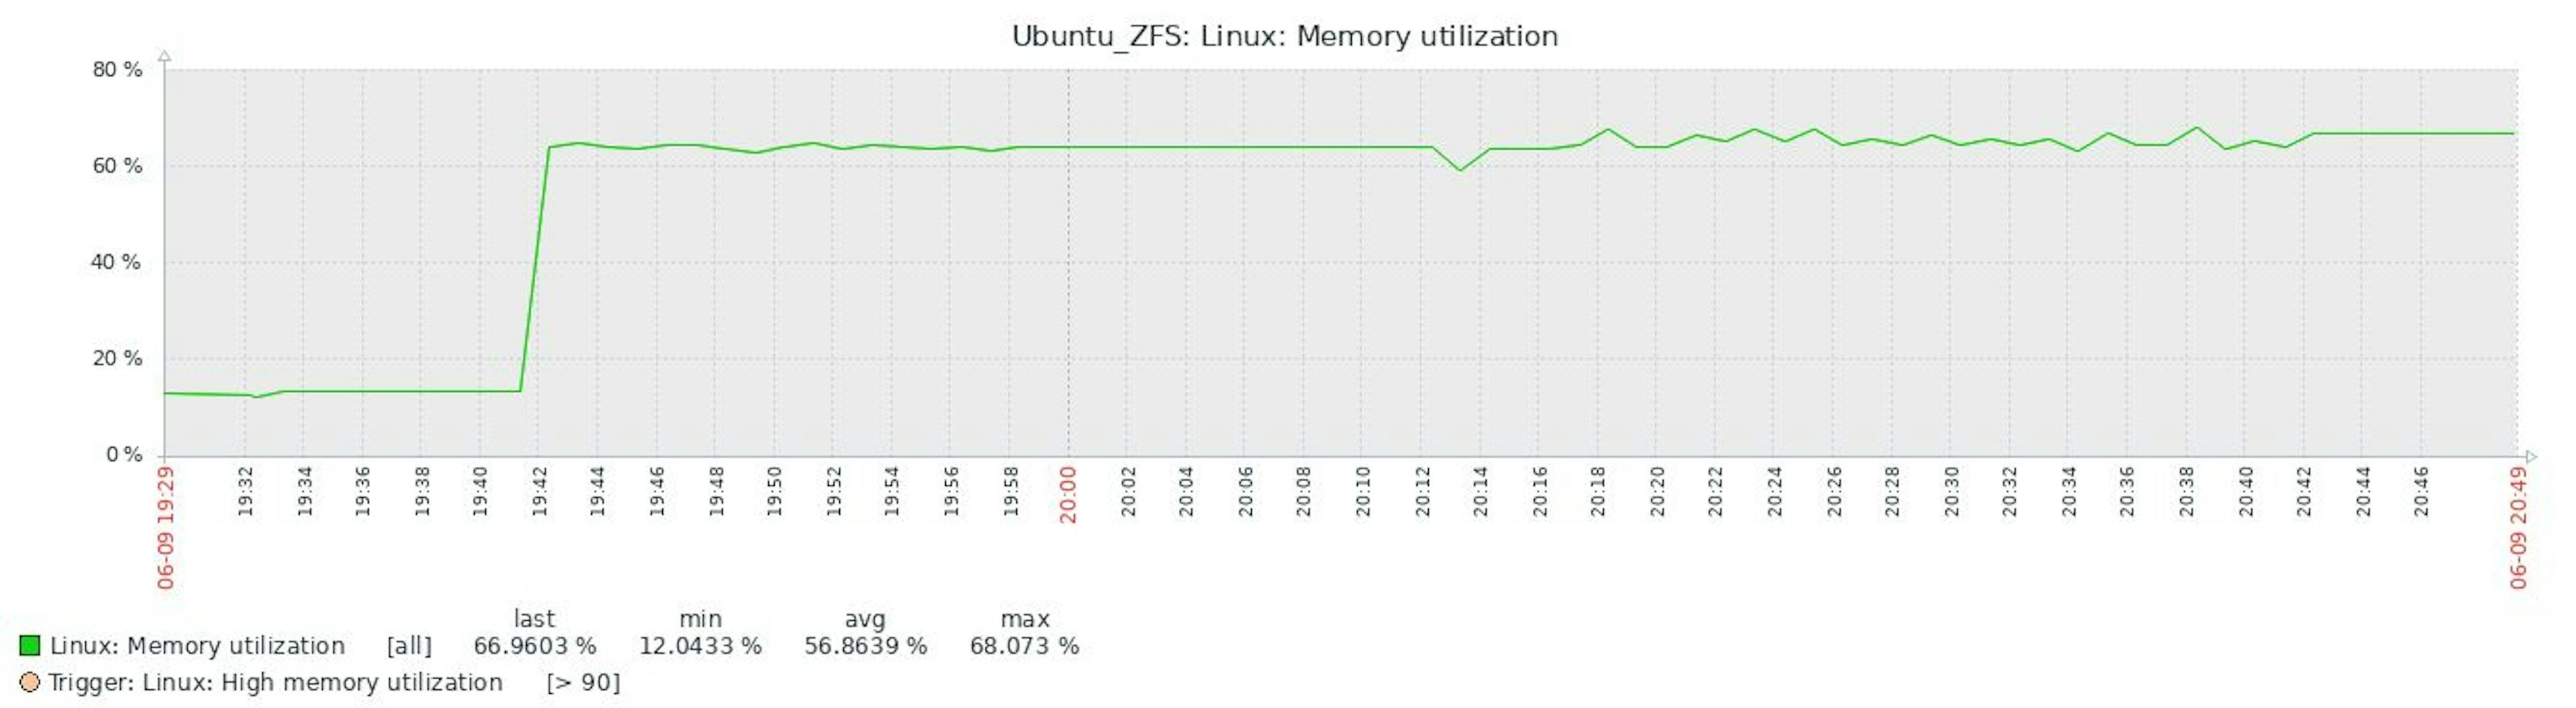 1.6.2 ZFS Memory utilization full